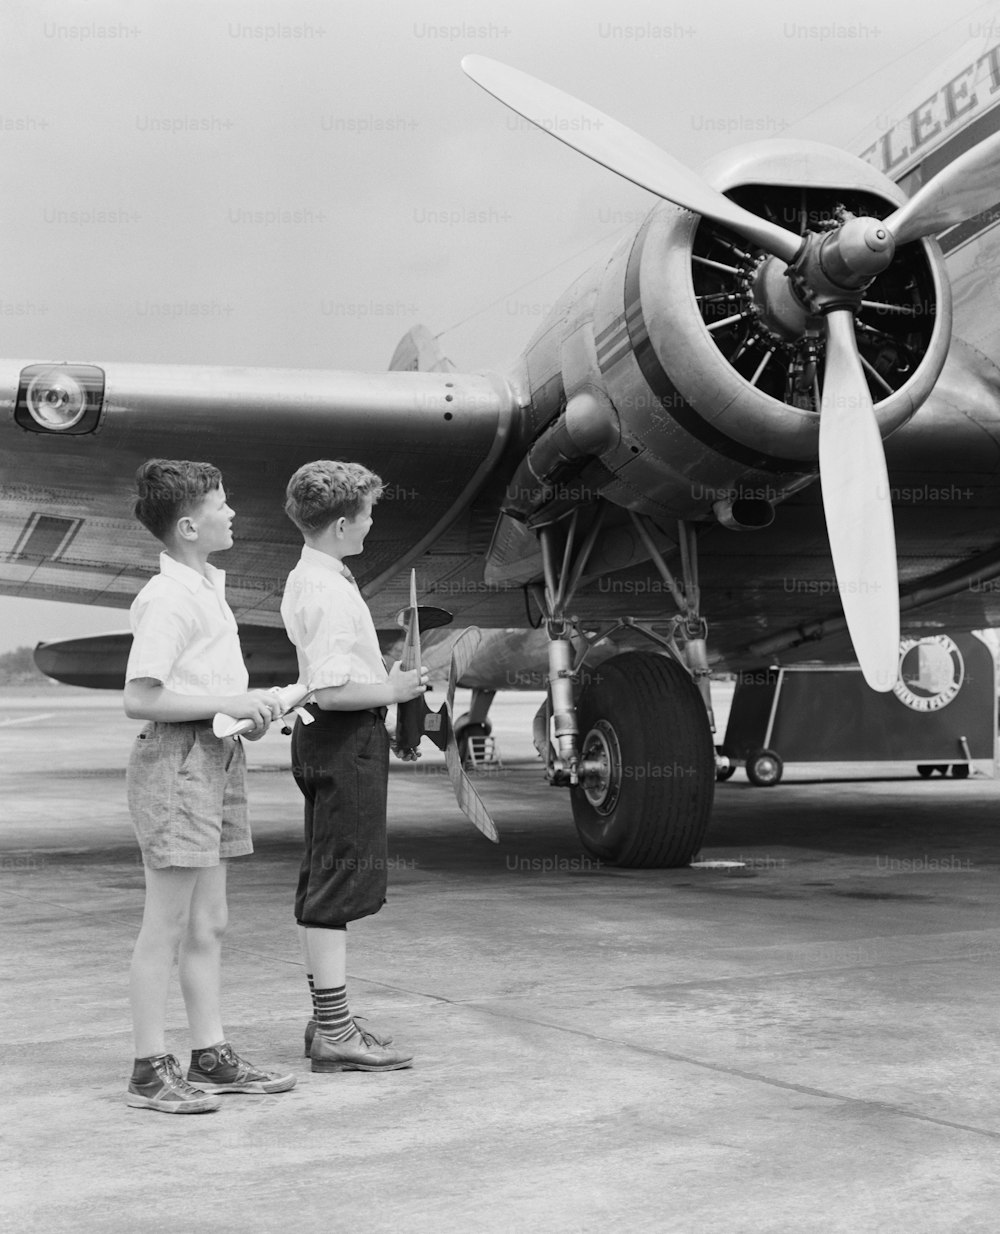 UNITED STATES - CIRCA 1940s:  Two boys standing next to propeller aeroplane, holding toy plane.